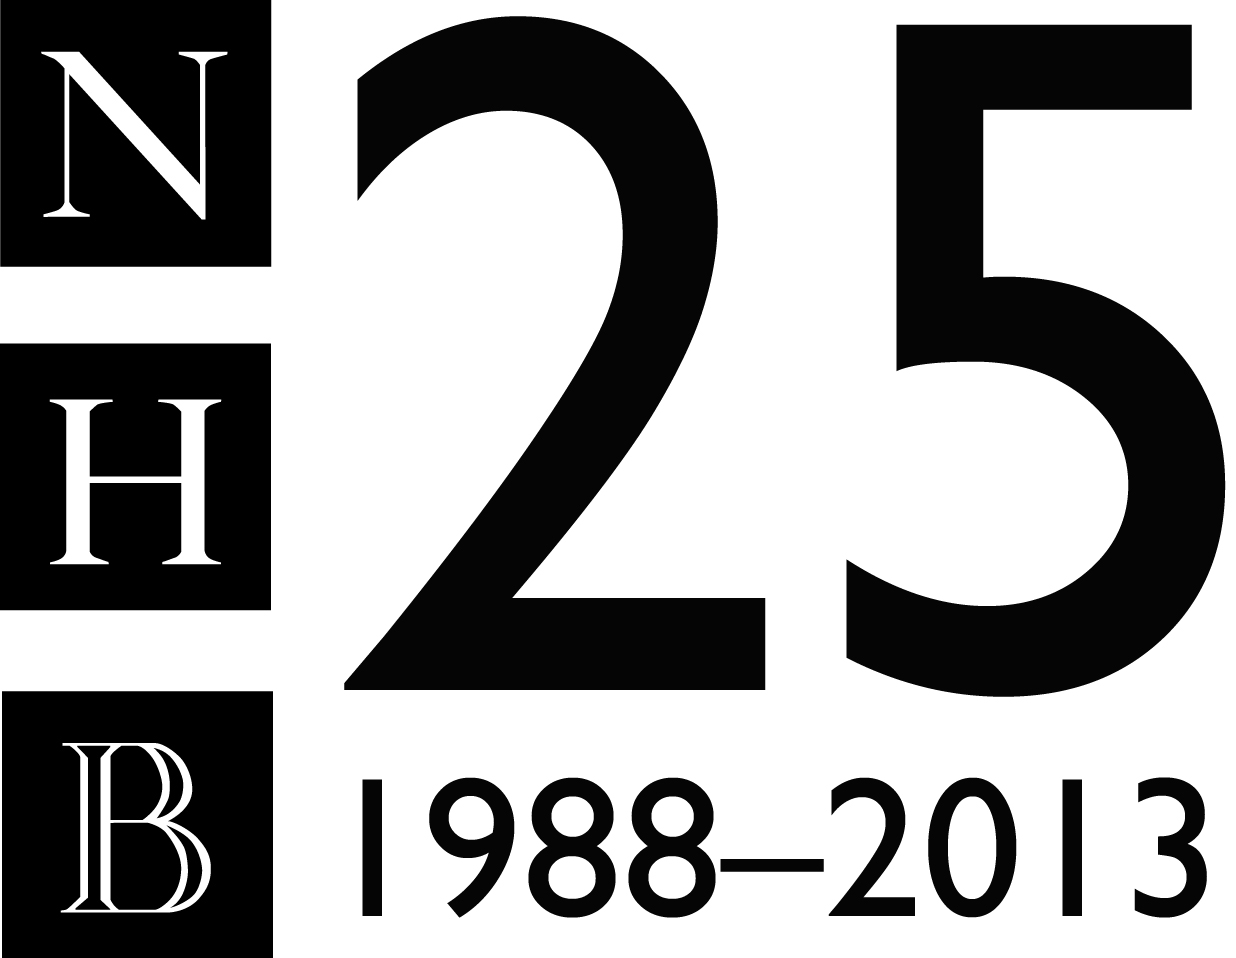 Nick Hern Books Celebrates 25 Years